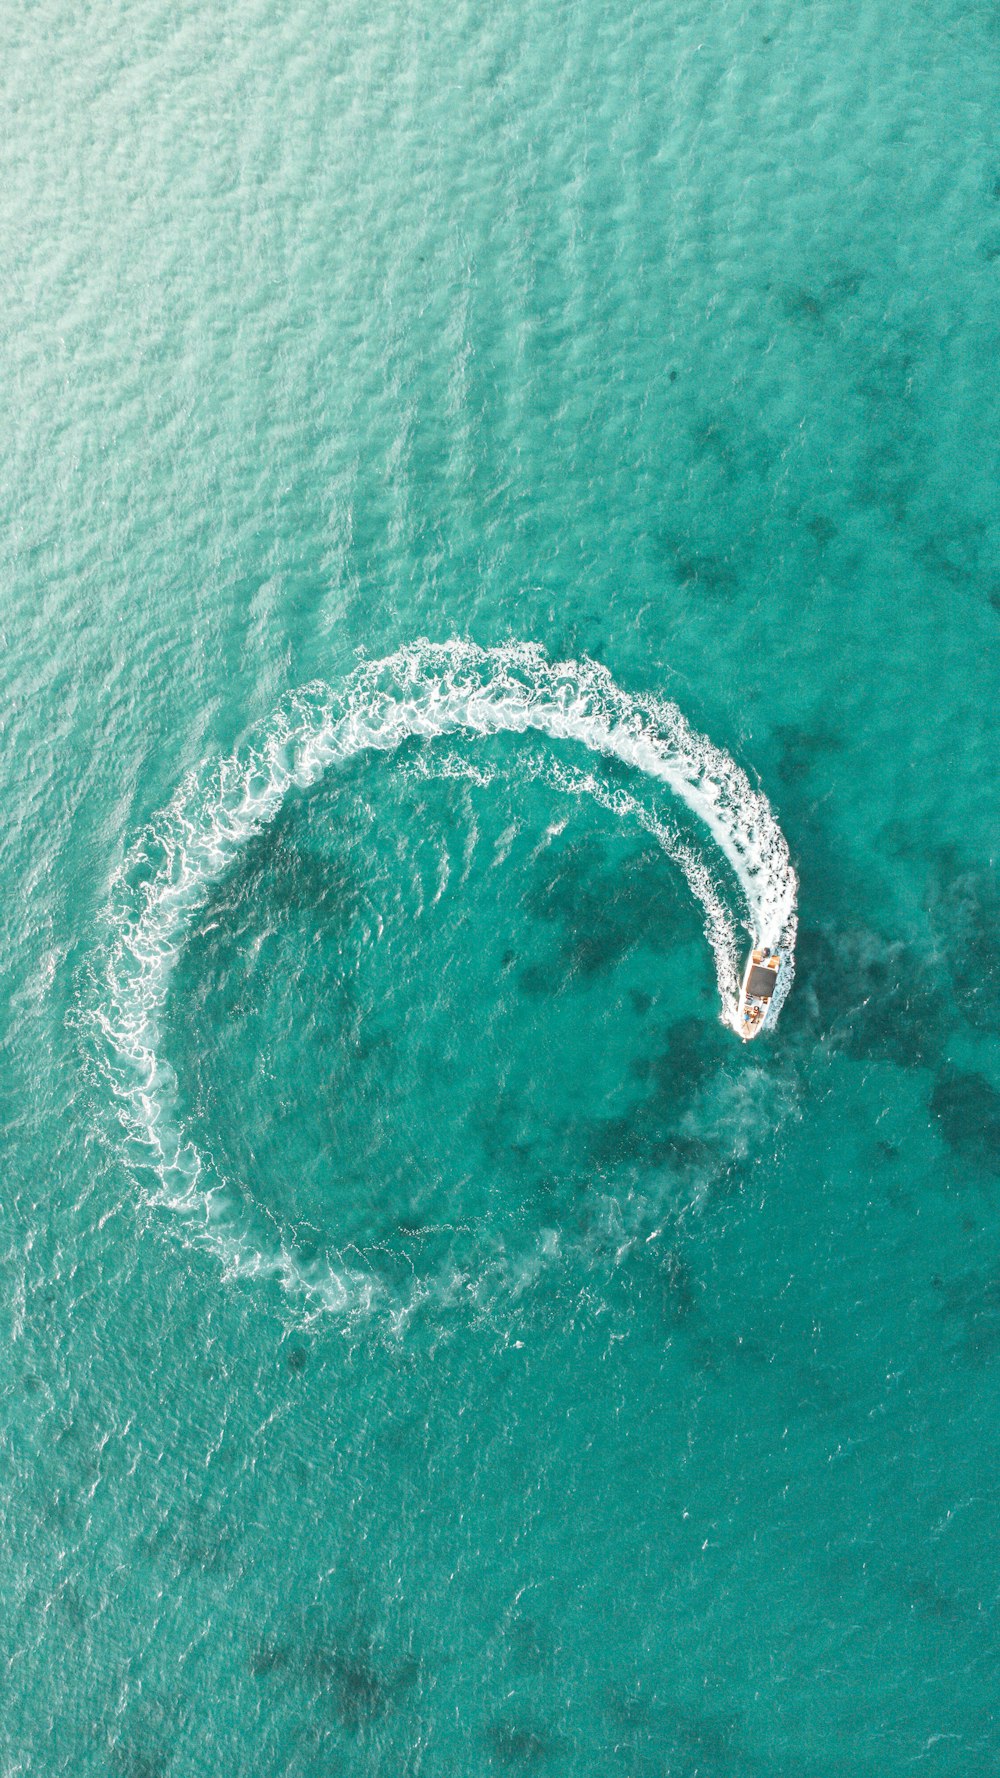 Una ballena en el agua